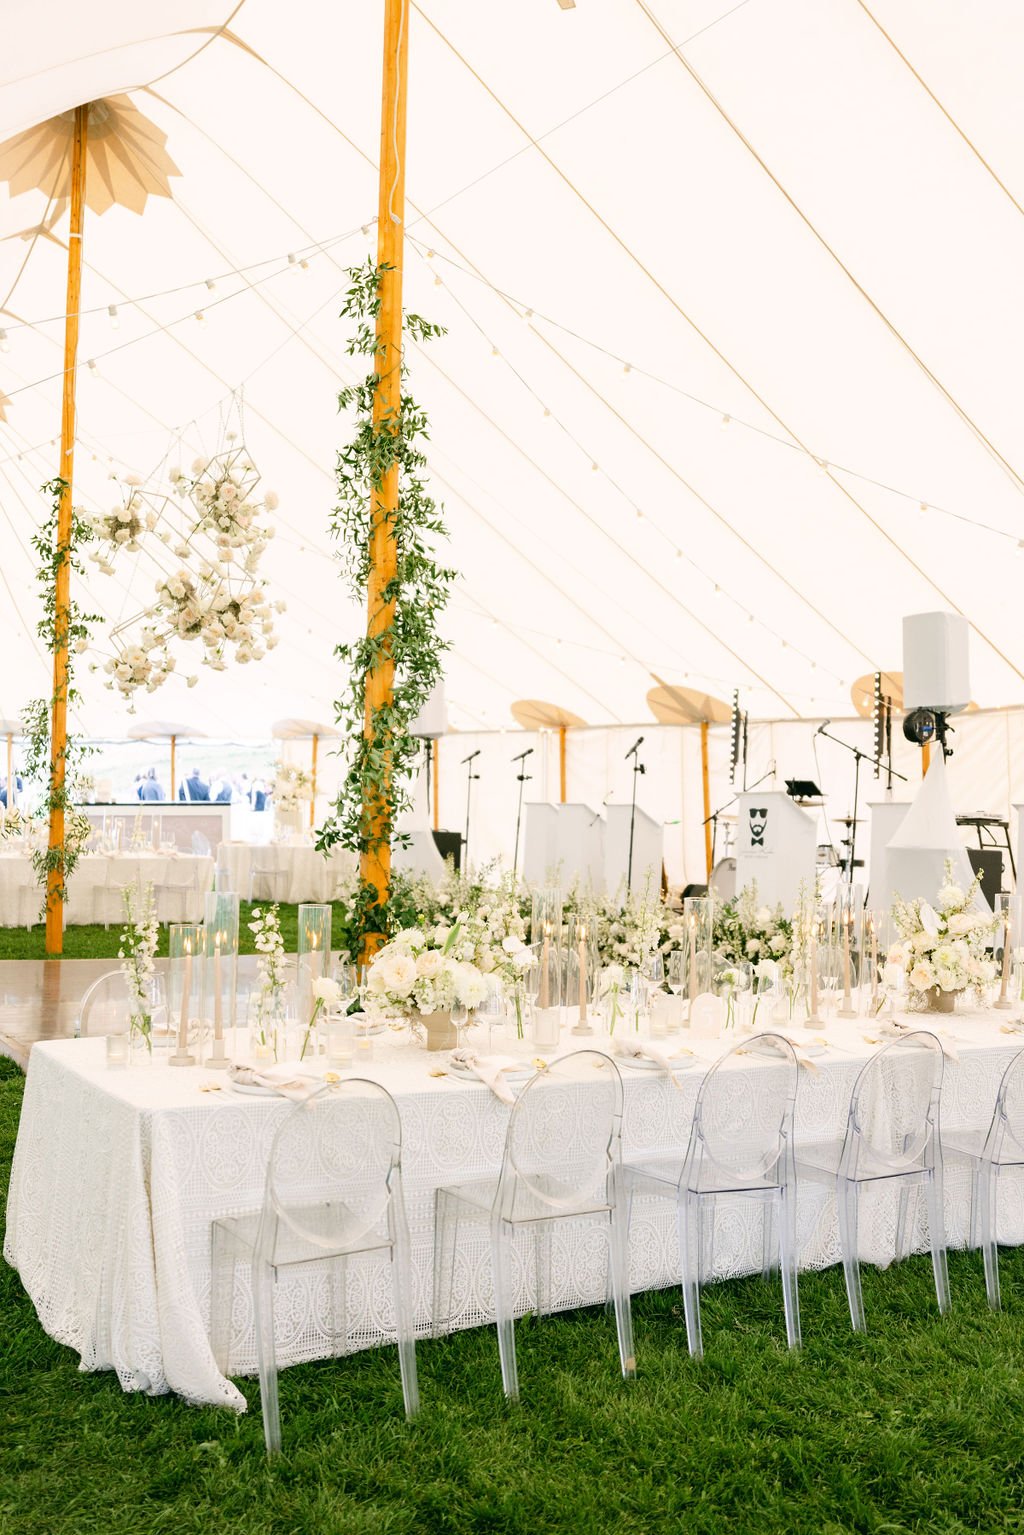  tent reception outdoor wedding aspen colorado white florals  